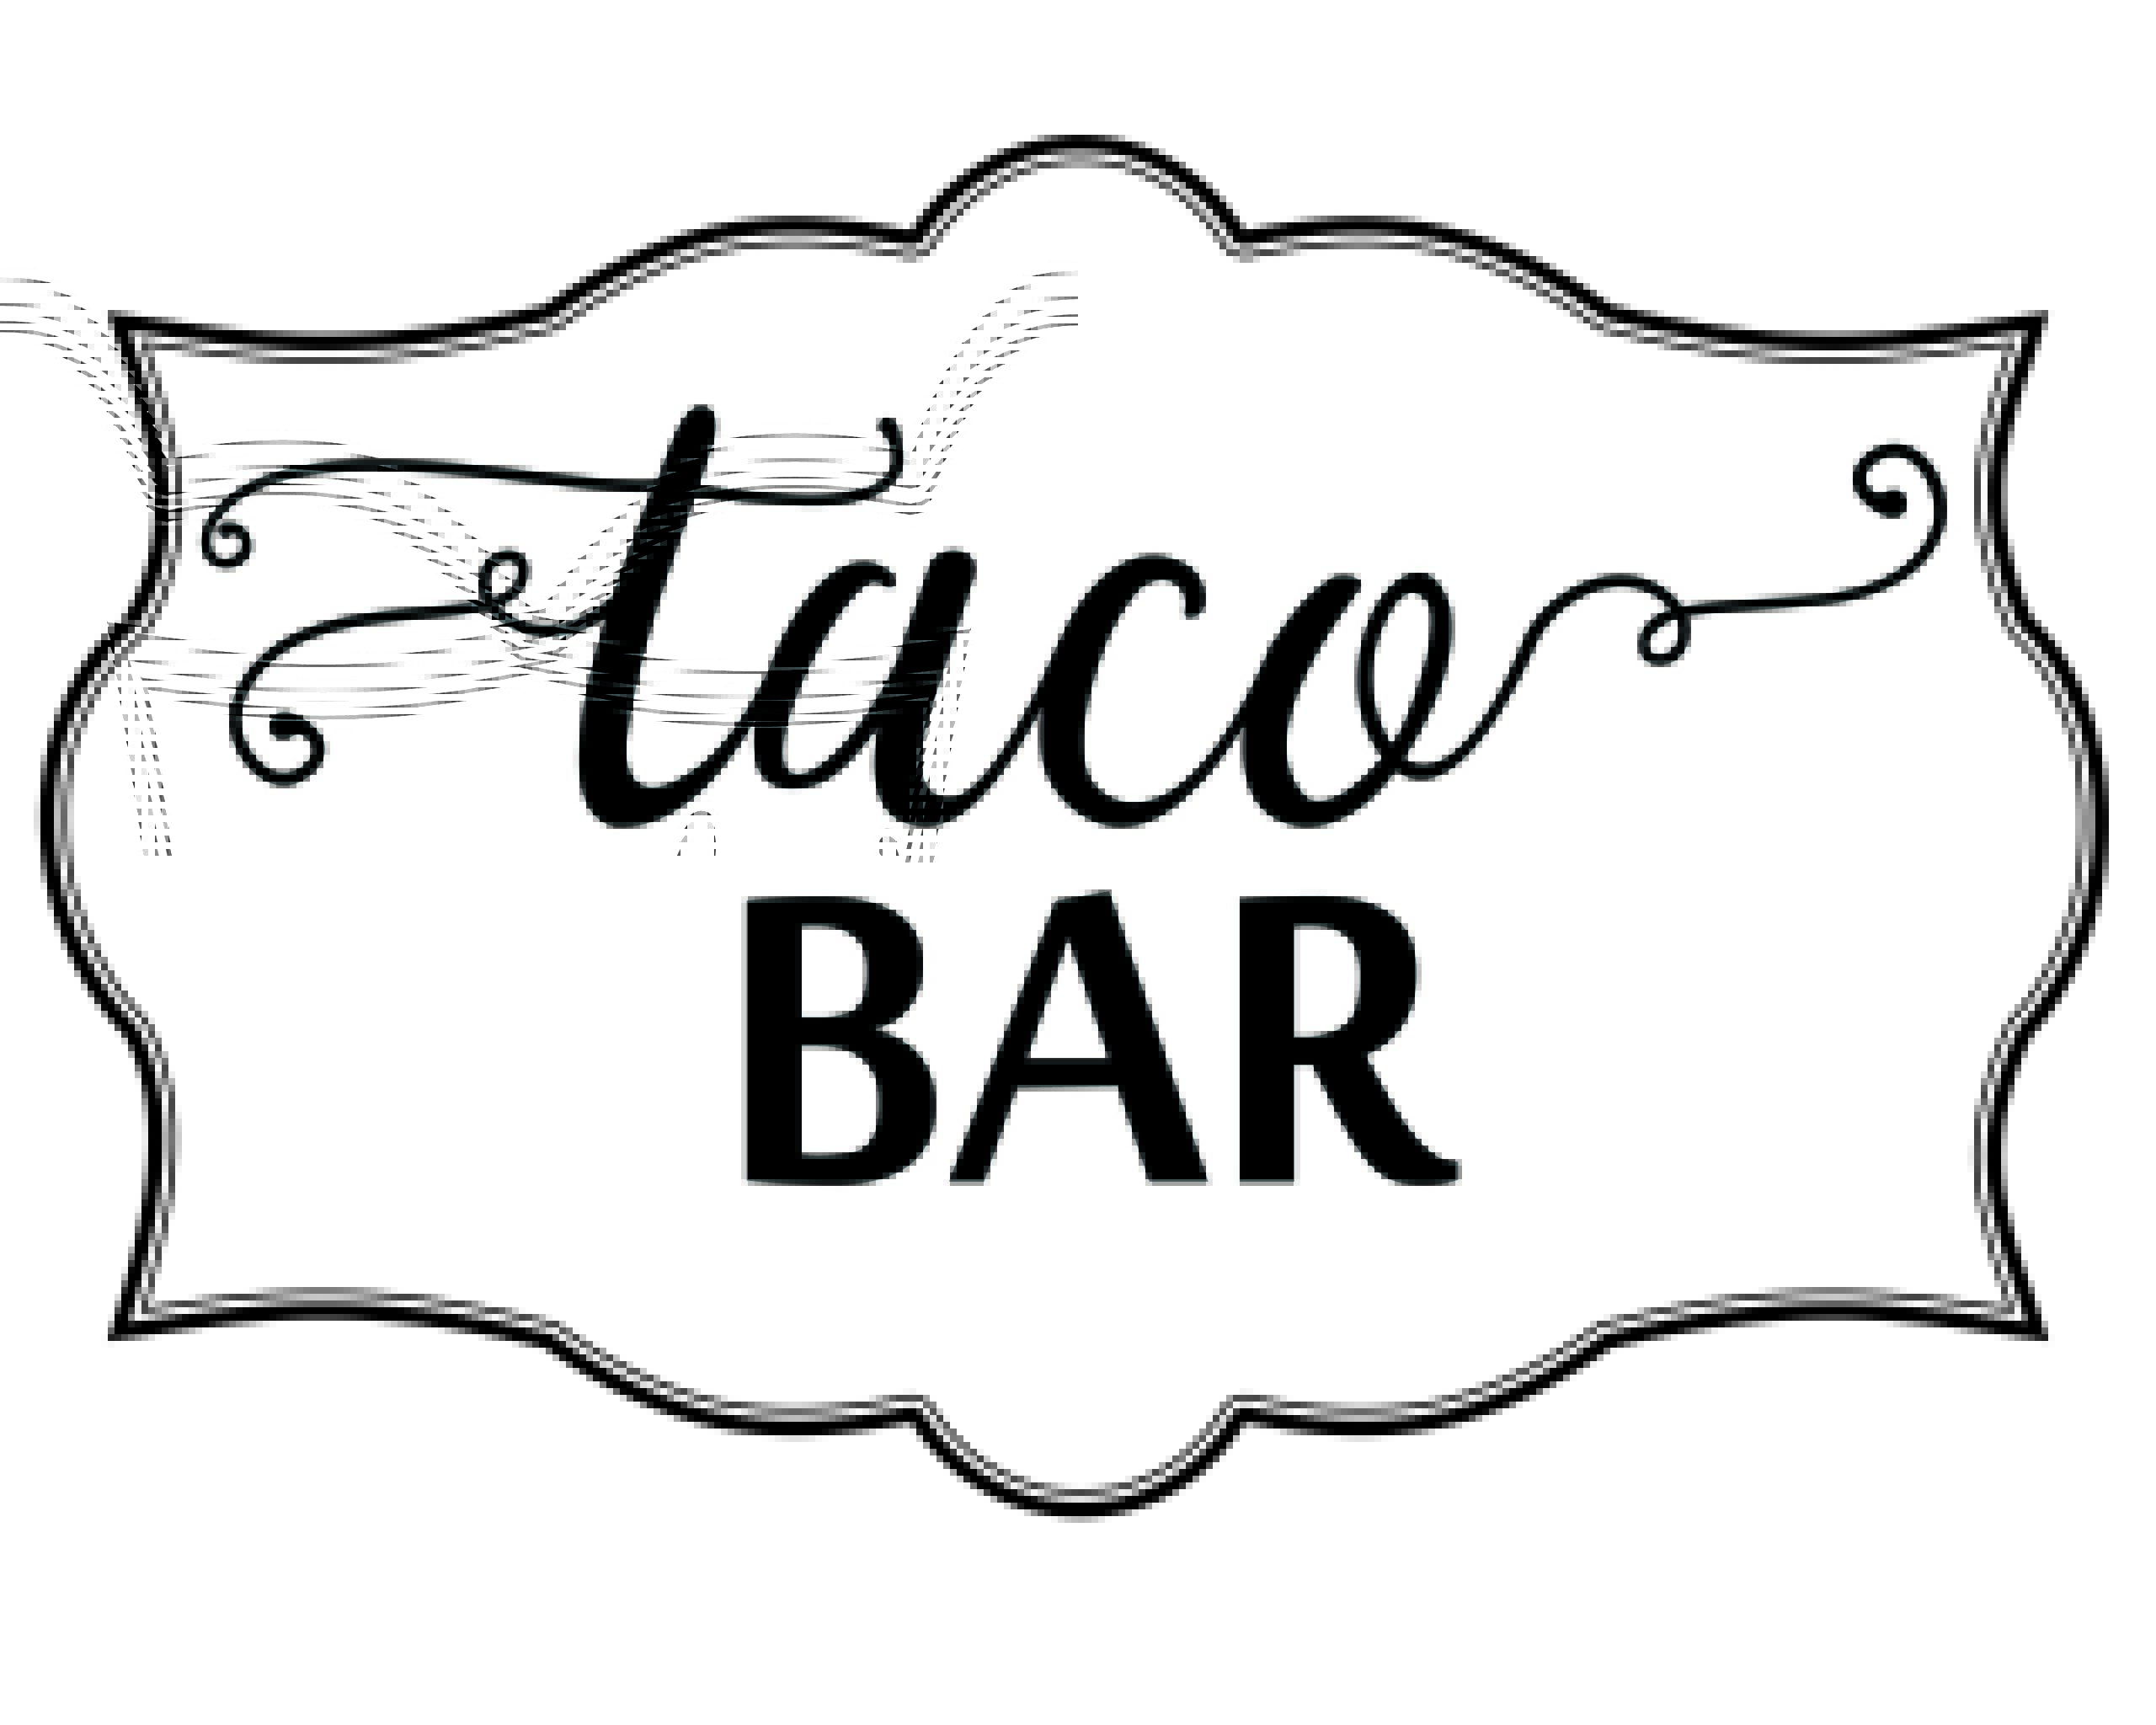 RS Taco Bar